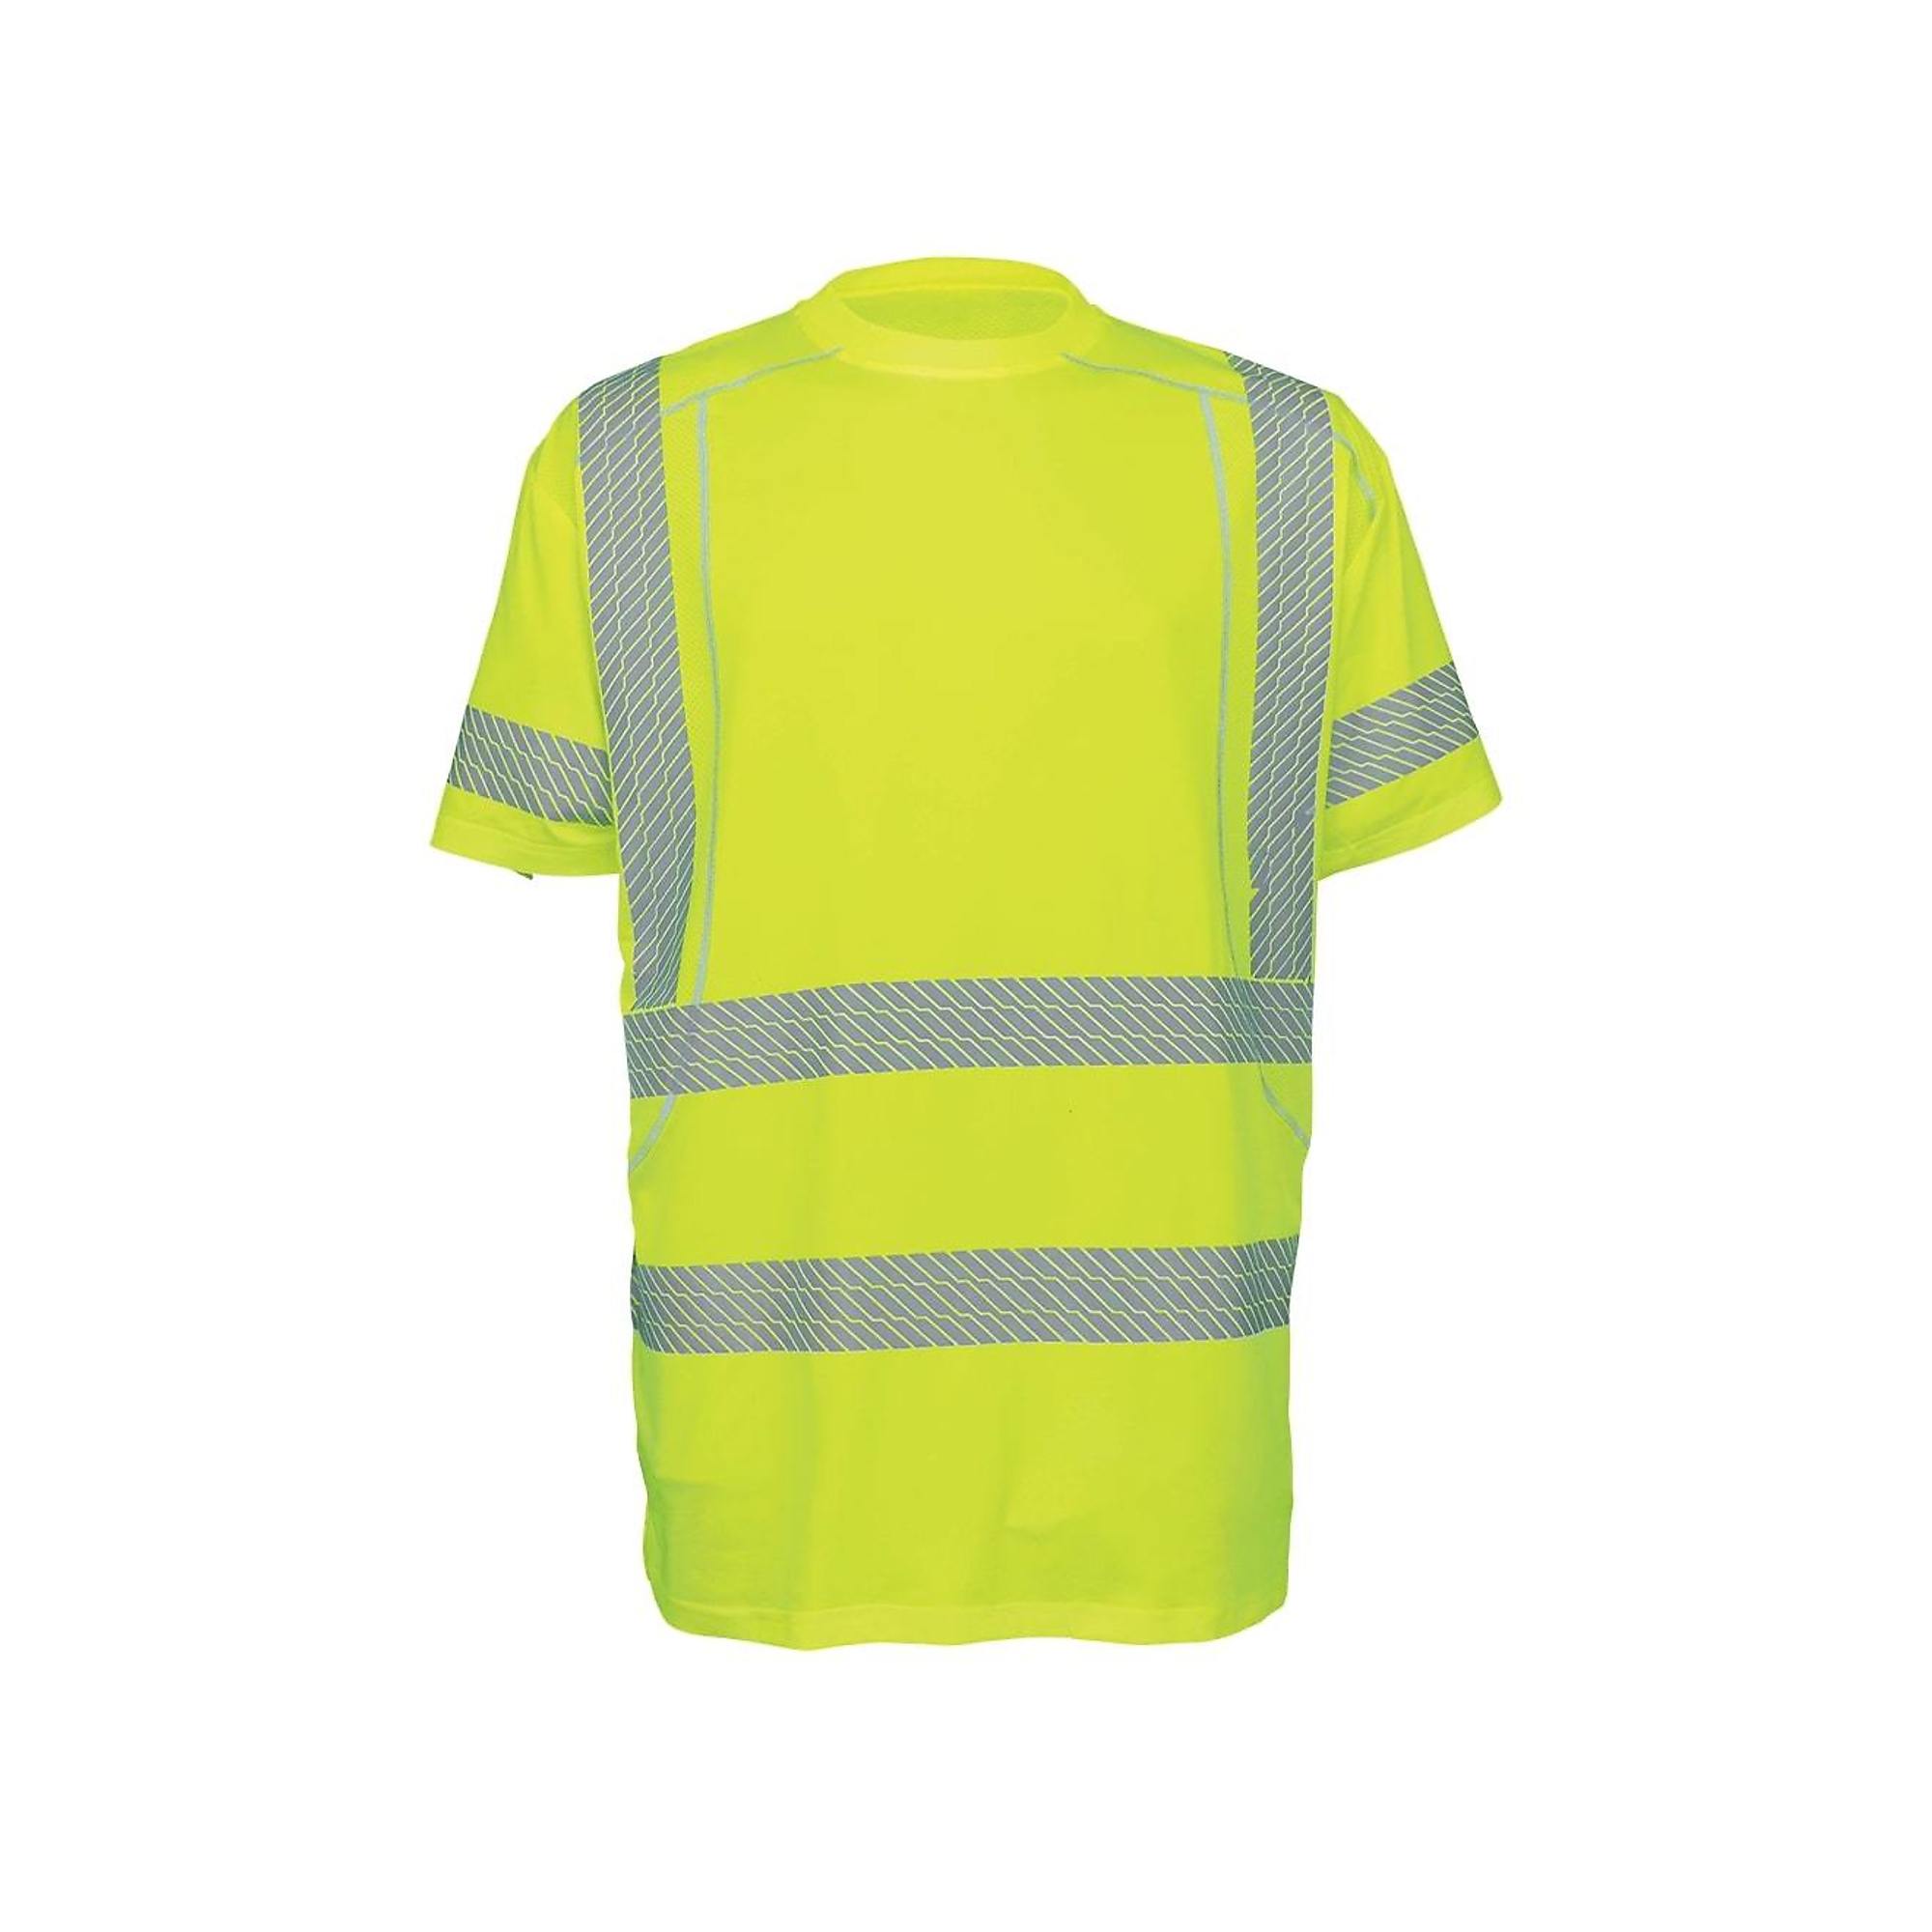 FrogWear, HV Yellow/Green, Class 3 Self-Wicking, Athletic Shirt, Size 2XL, Model GLO-205-2XL